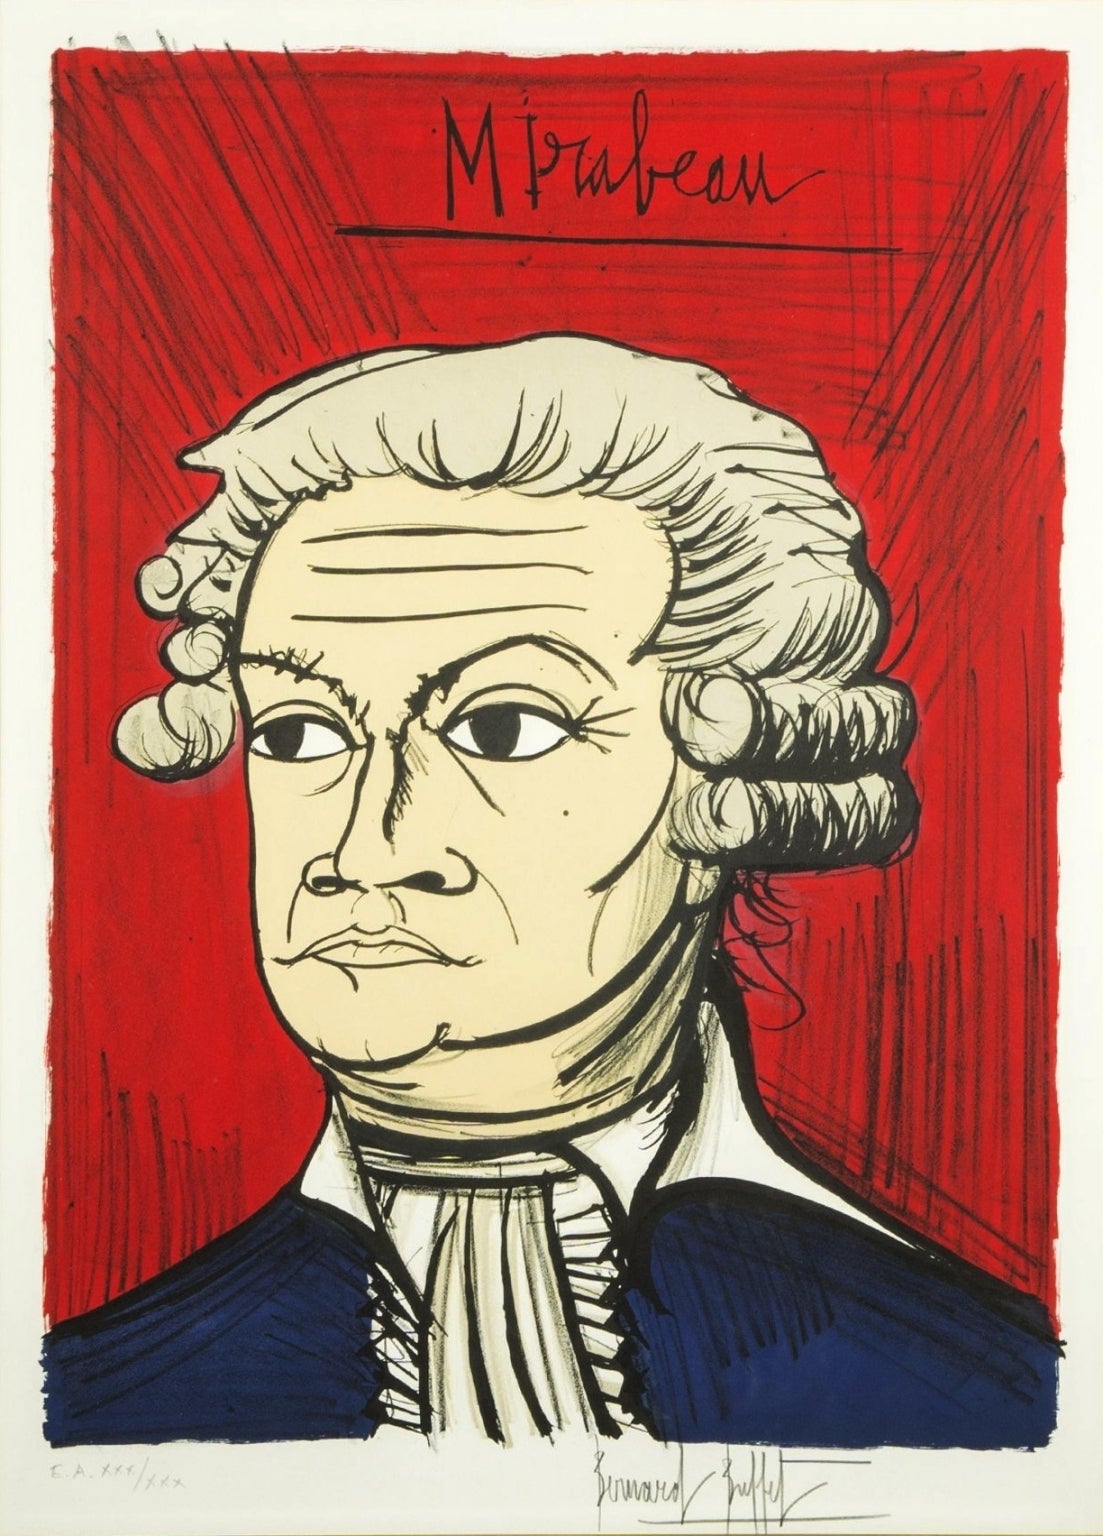 Bernard Buffet Portrait Print - Mirabeau from the French Revolution